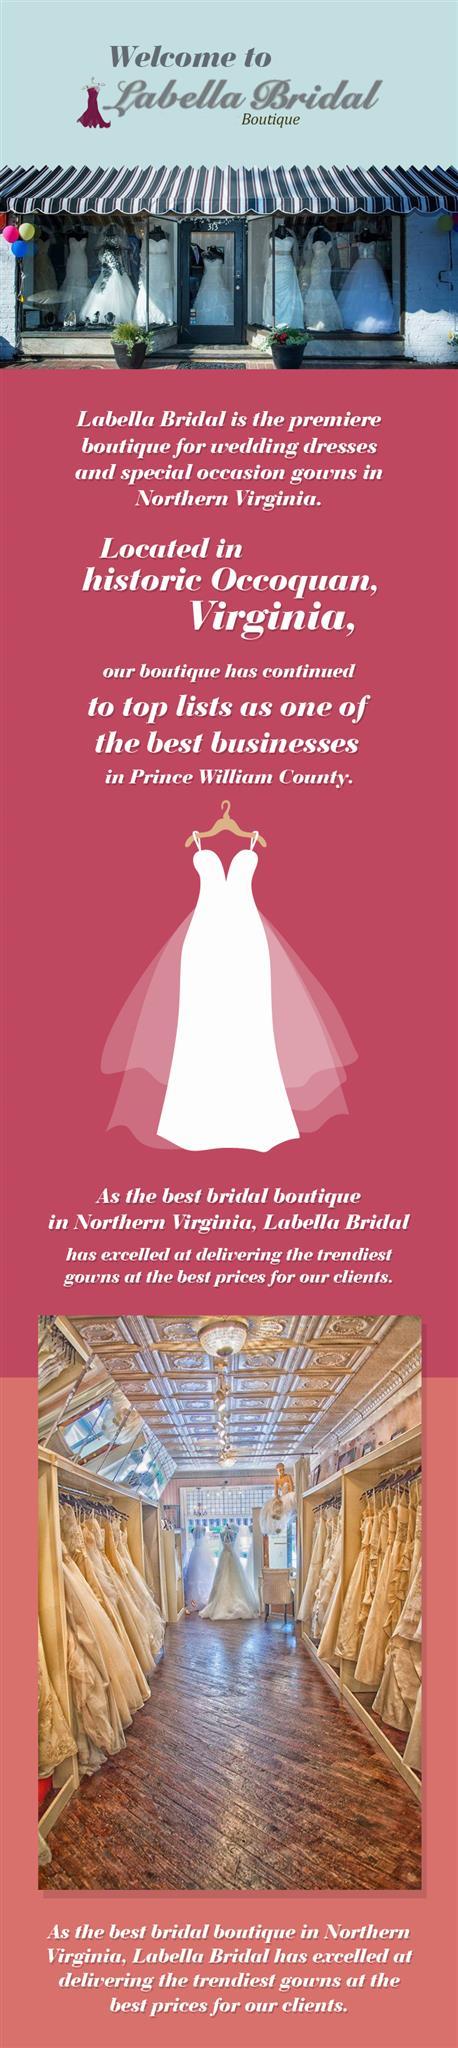 Labella Bridal Boutique - A Premiere Bridal Boutique in Northern Virginia